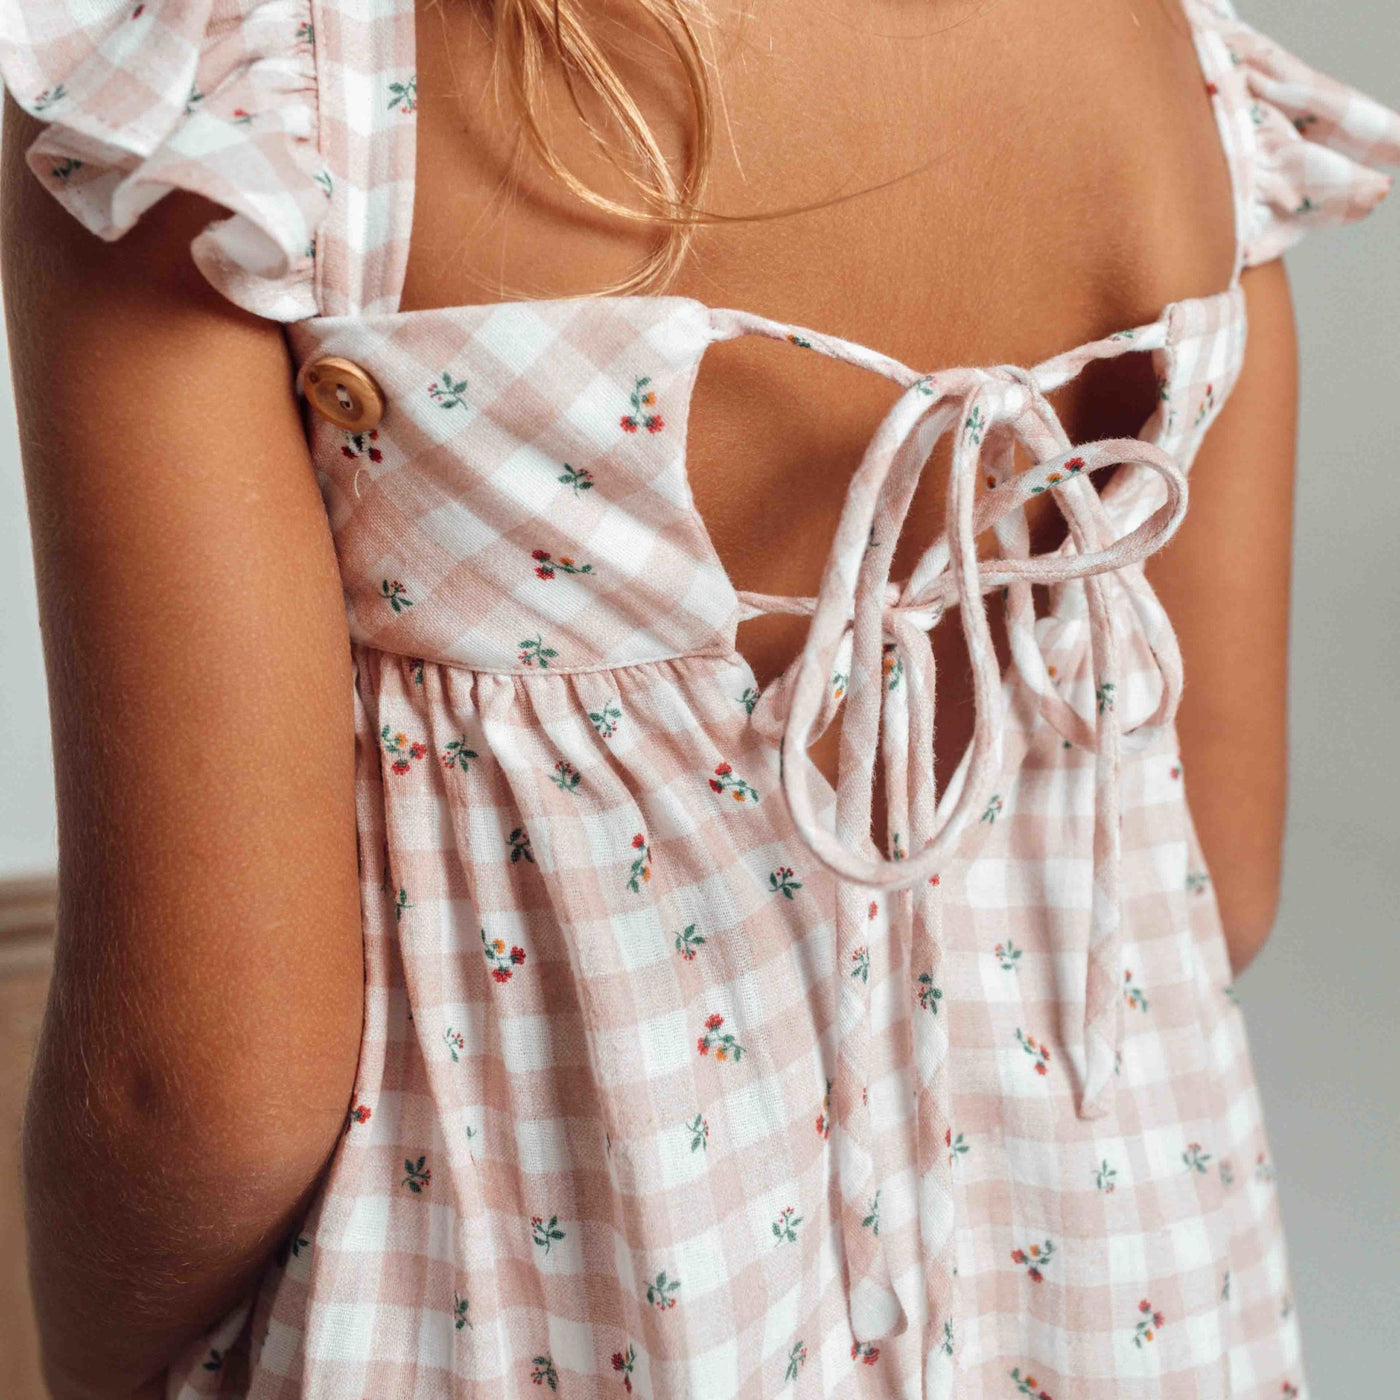 Pink Flower Dress by Birinit Petit - Petite Belle